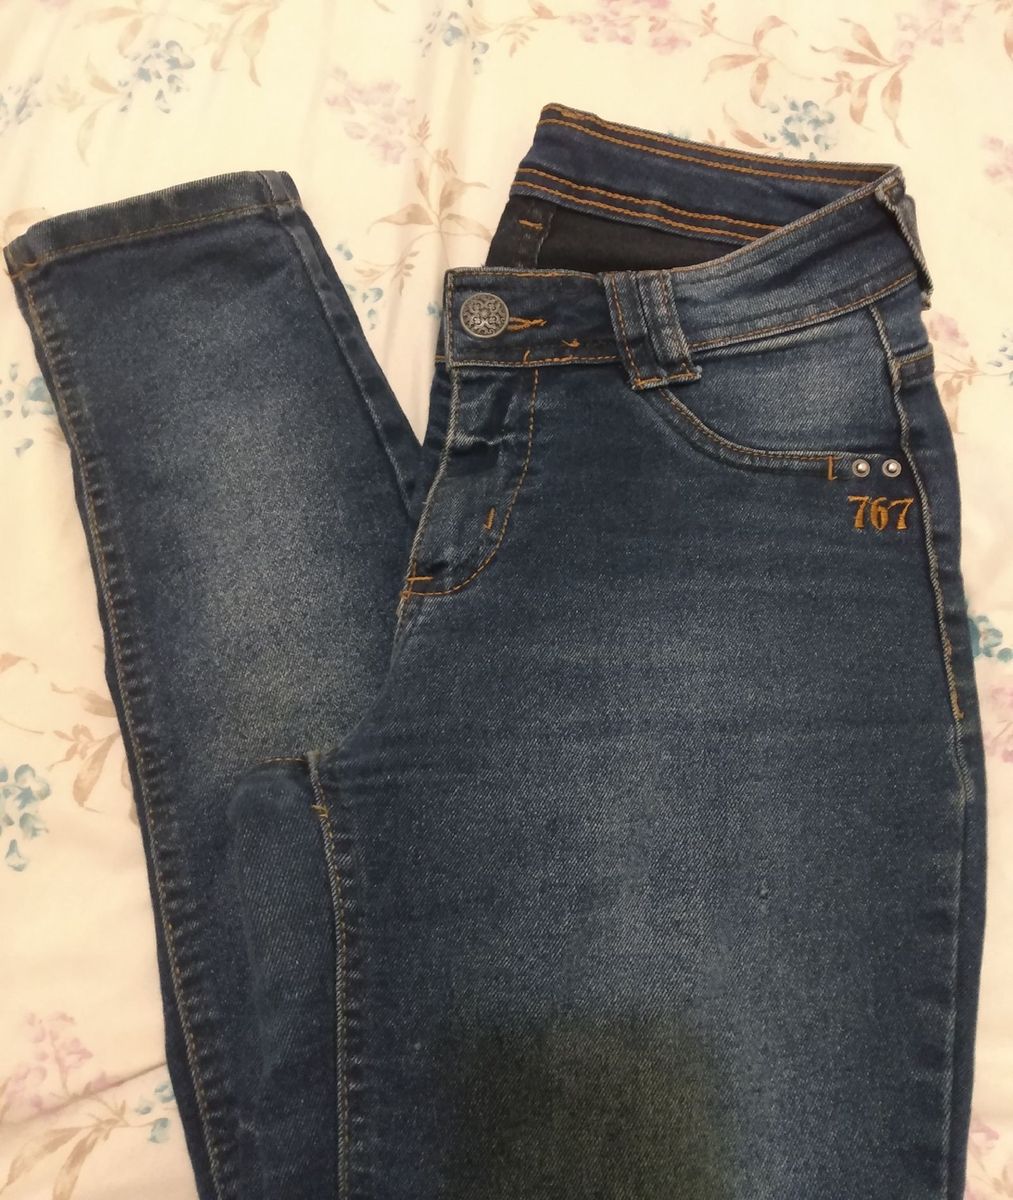 calça jeans feminina 767